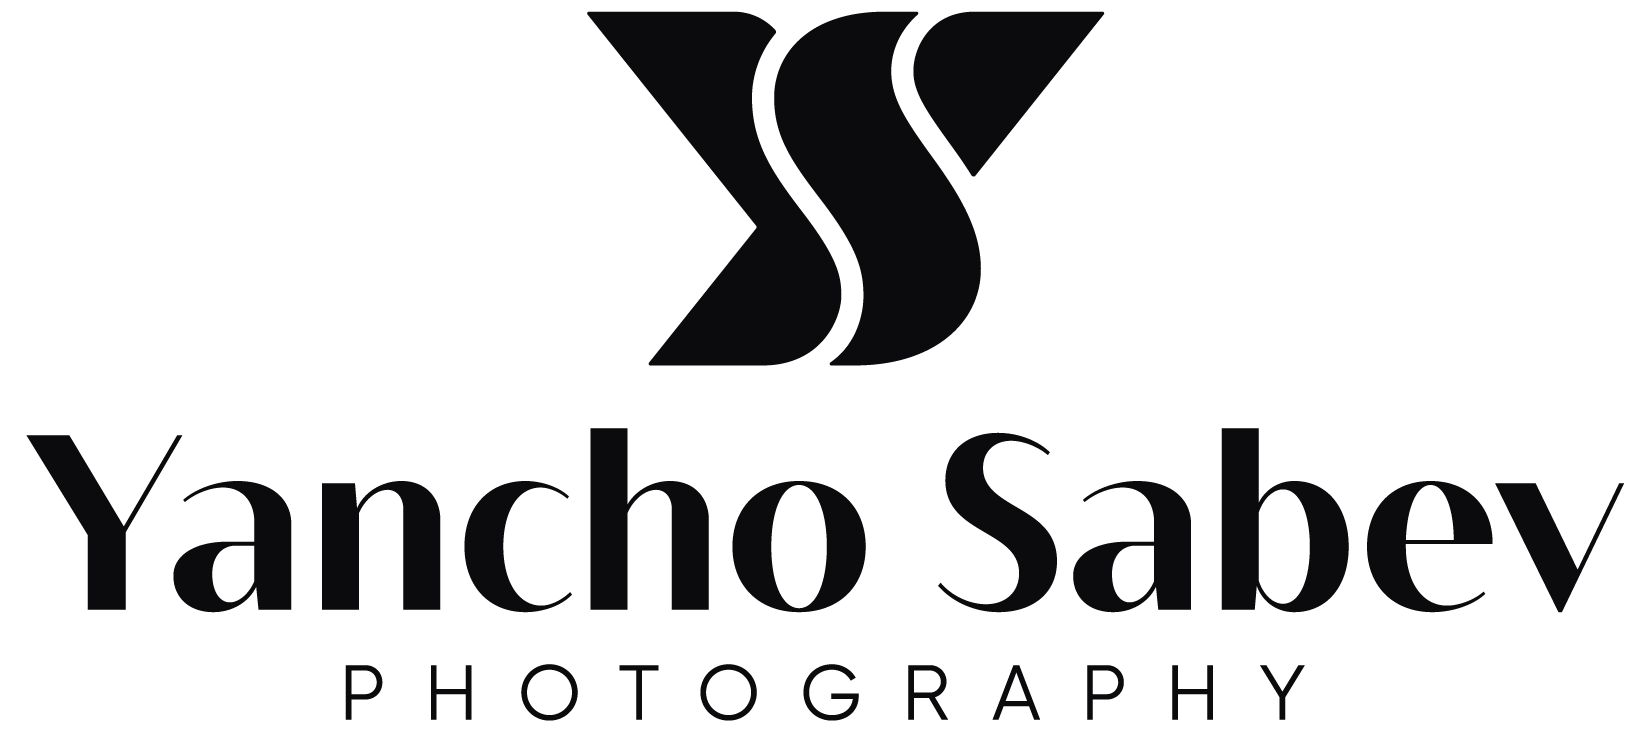 Yancho Sabev Art - Website